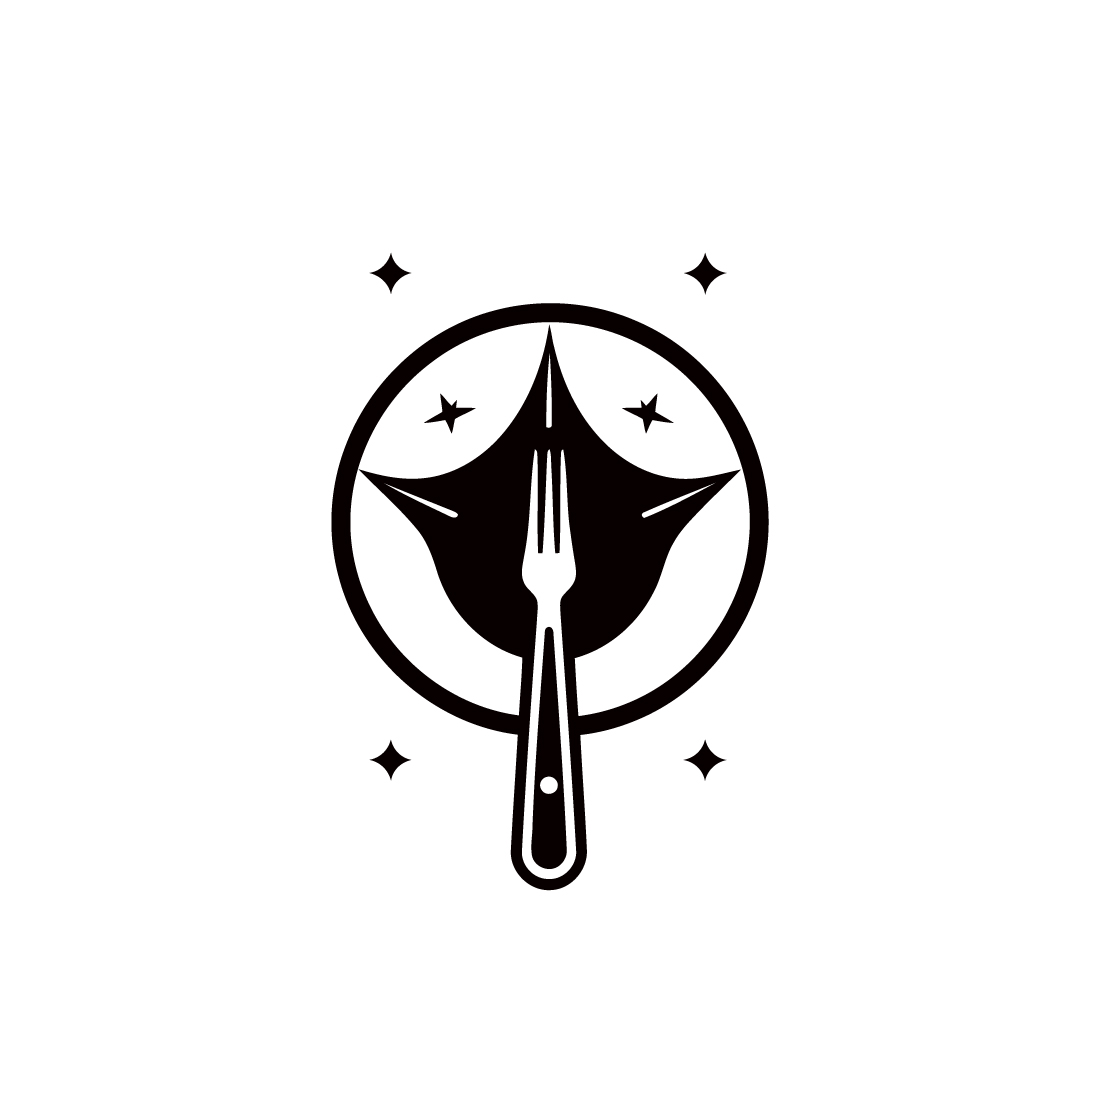 spoon stars logo design cover image.